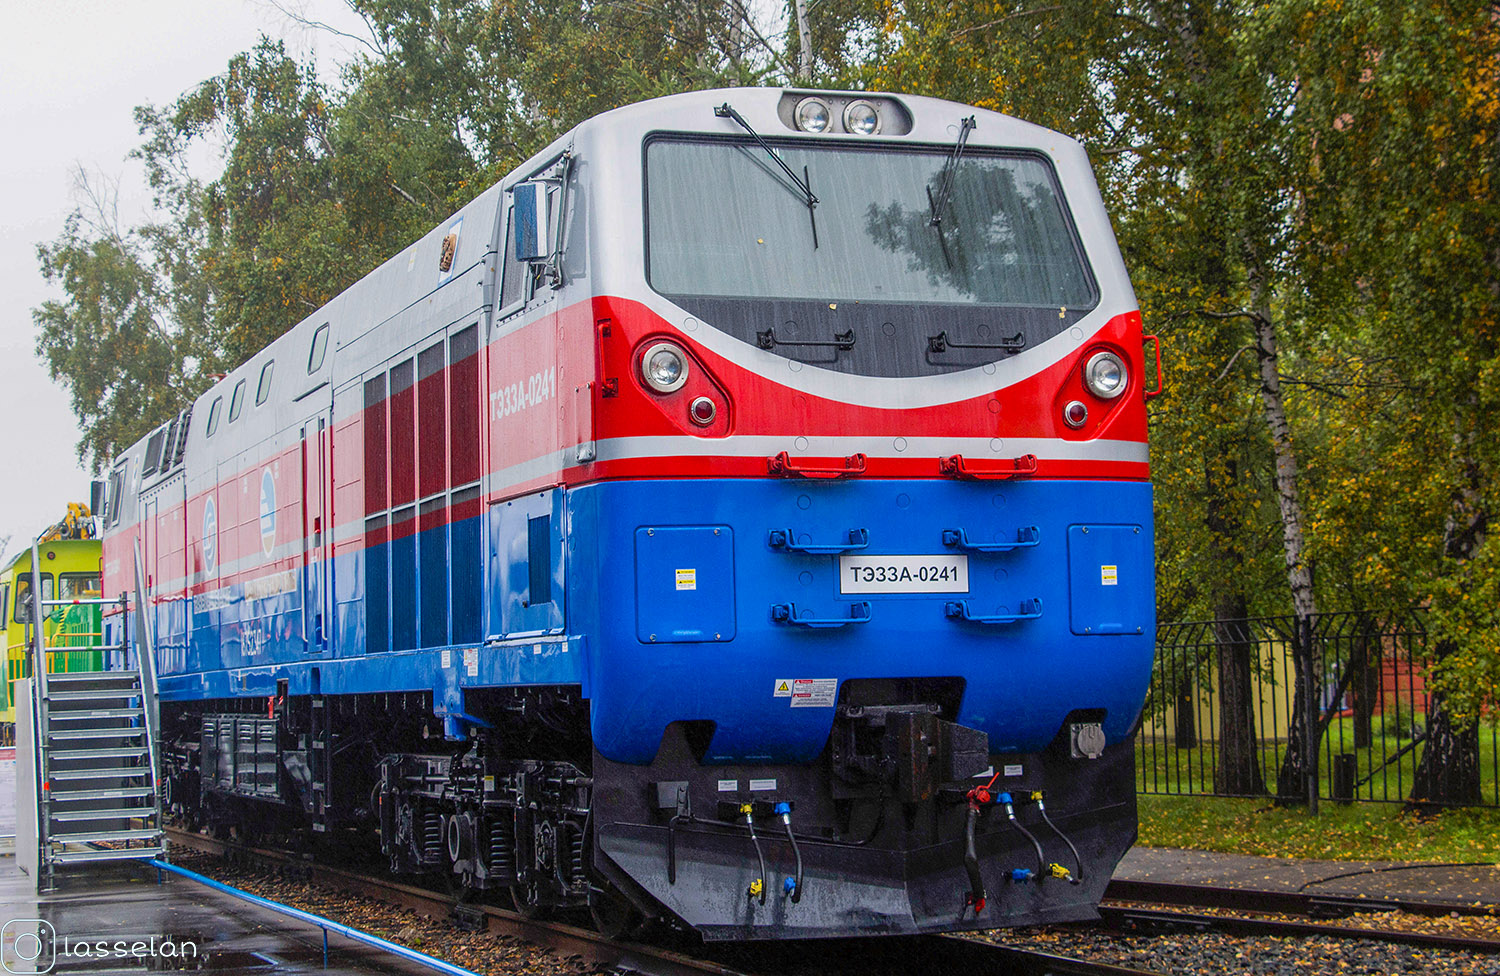 ТЭ33А-0241; Moscow Railway — The 4th International Rail Salon EXPO 1520